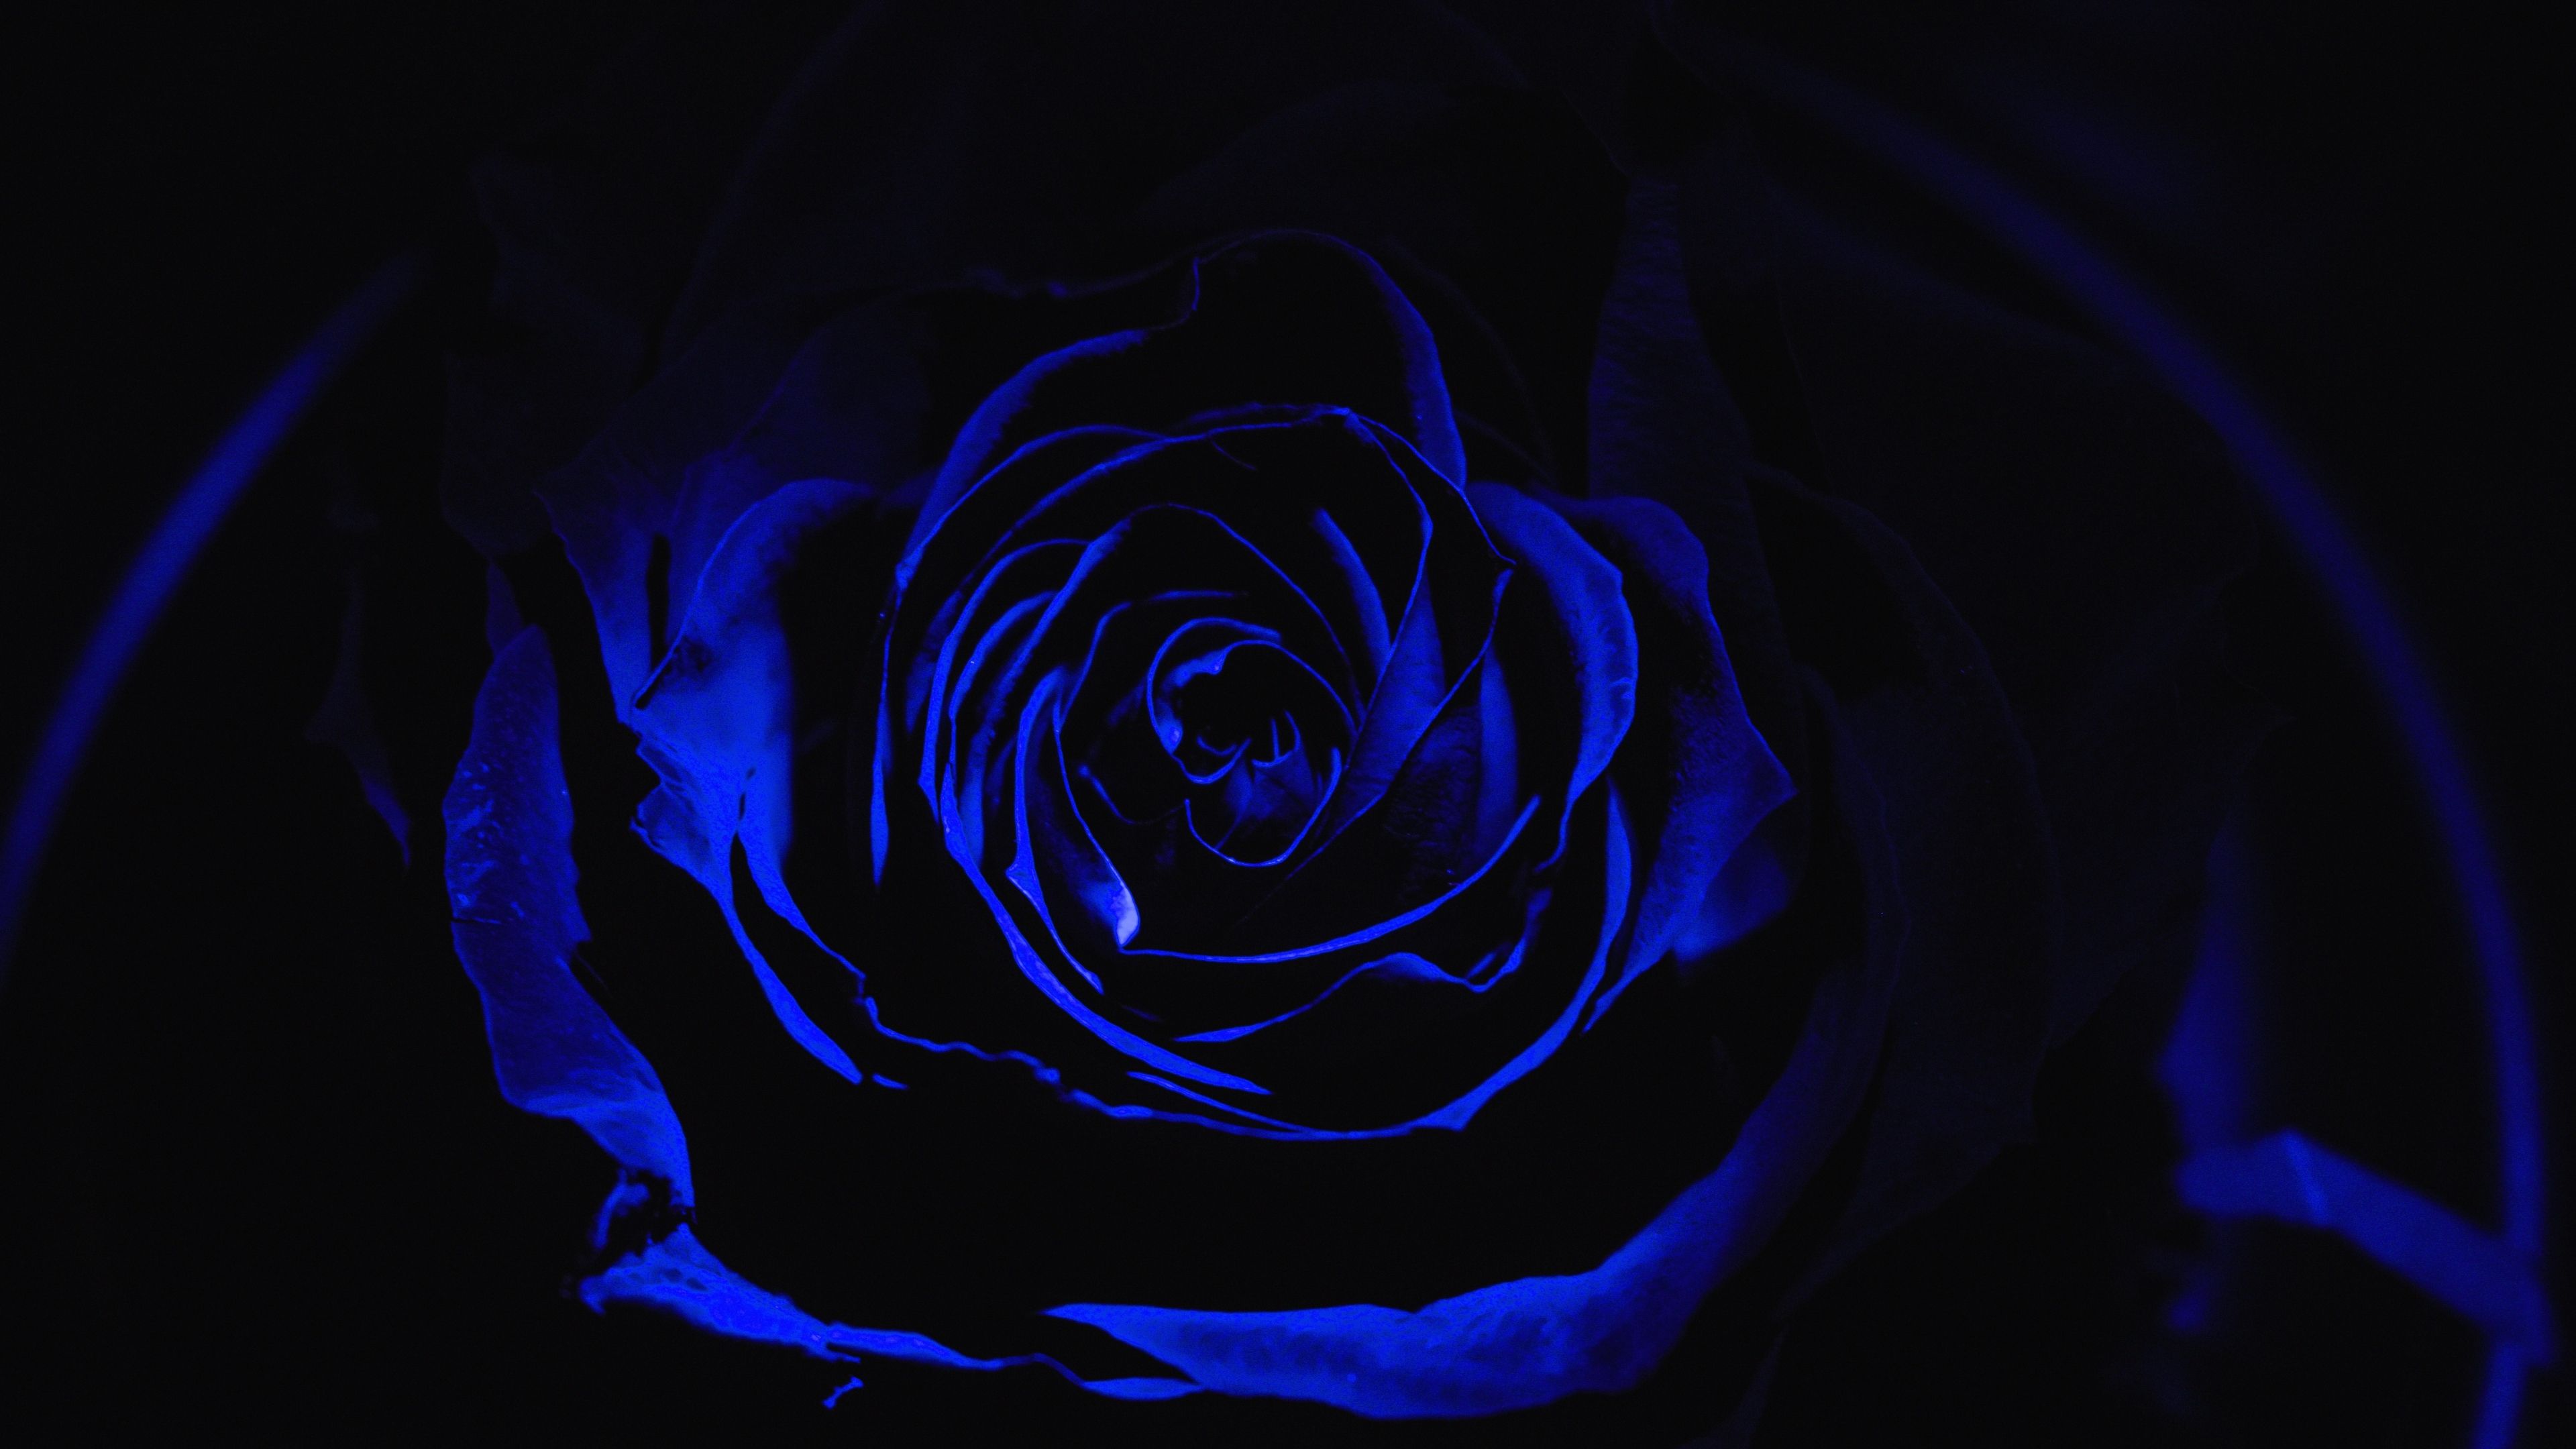 Nature Life  Ice blue rose beautifulflowers BeautifulRose  naturelovers  Facebook